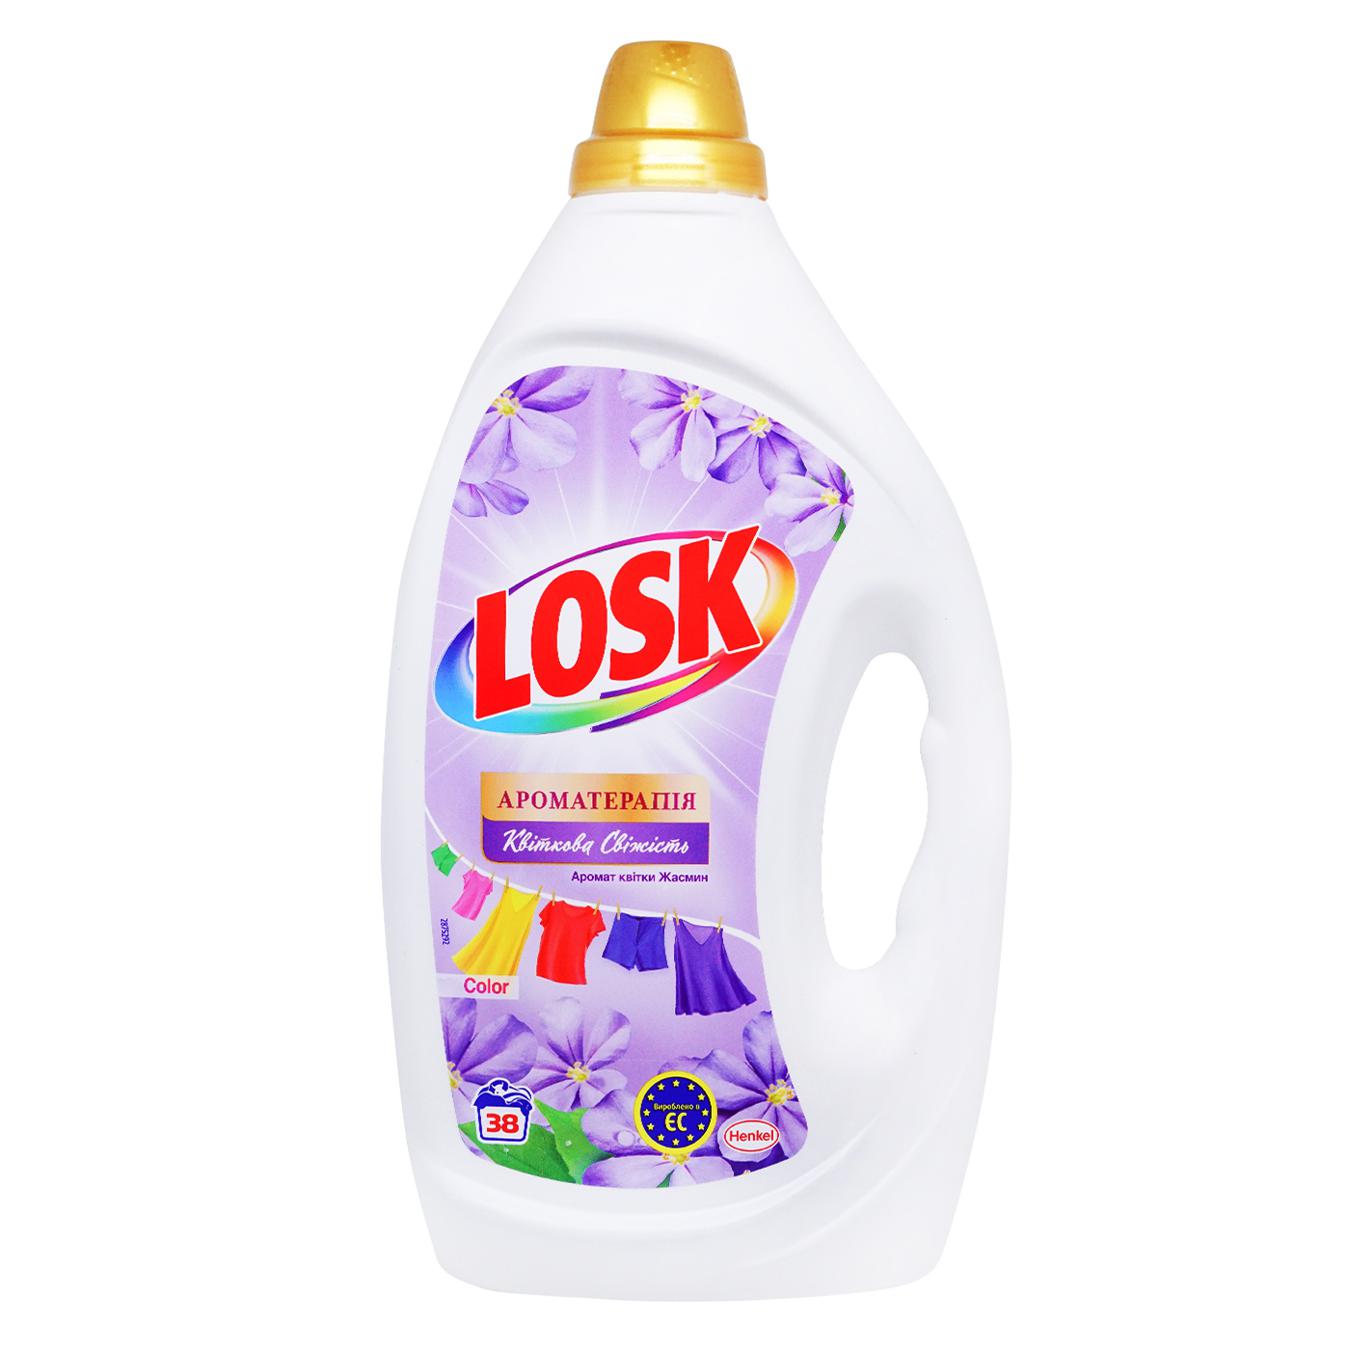 Losk washing gel Color Essential oils and Jasmine flower aroma 1.710 l